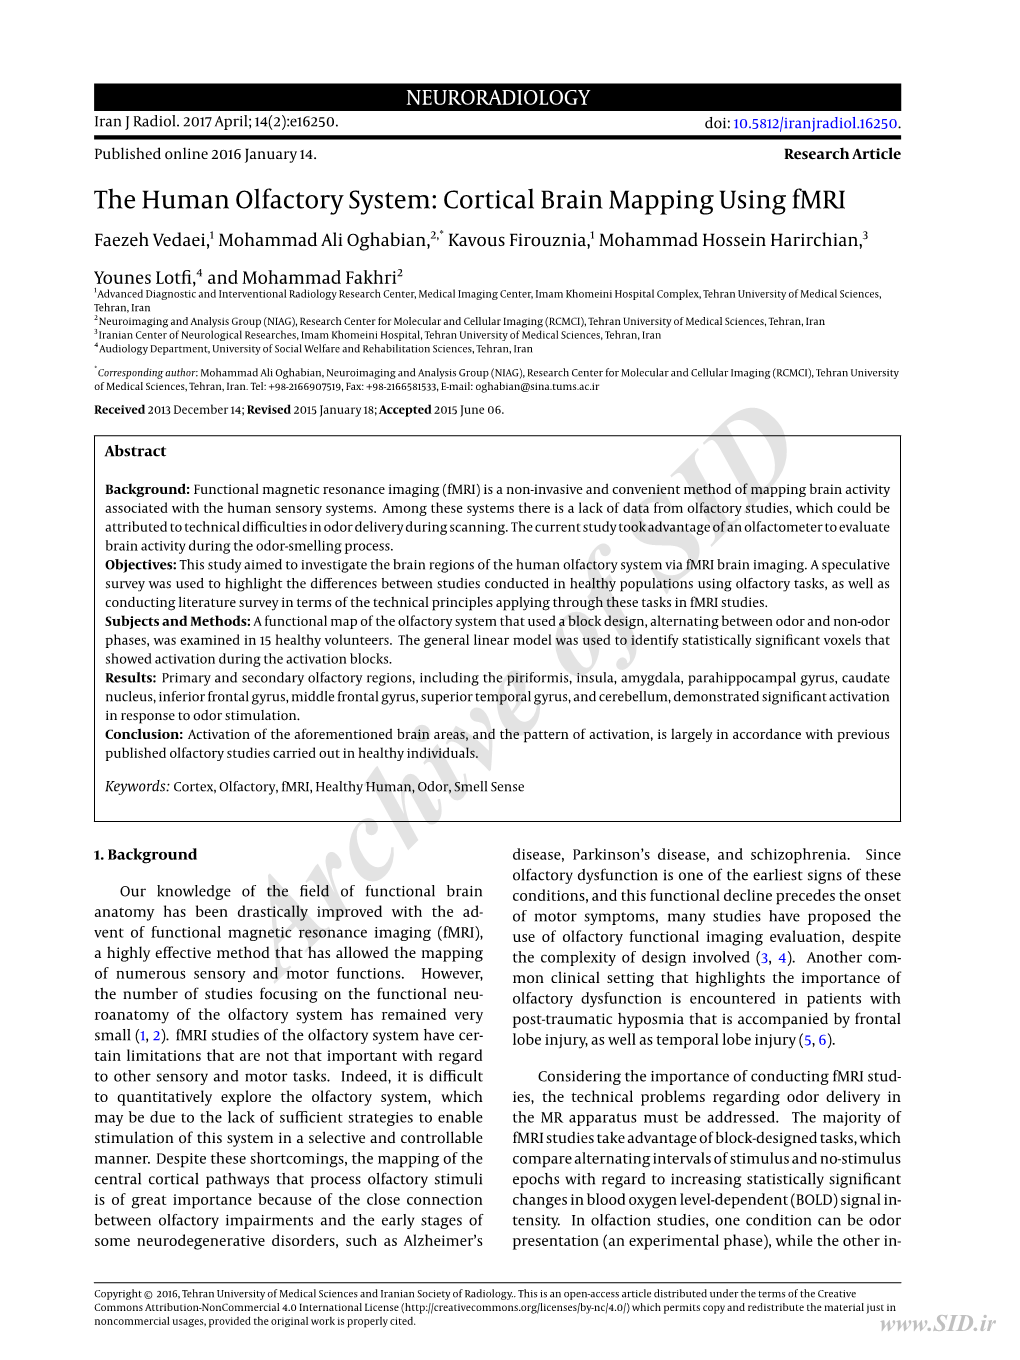 The Human Olfactory System: Cortical Brain Mapping Using Fmri Faezeh Vedaei,1 Mohammad Ali Oghabian,2,* Kavous Firouznia,1 Mohammad Hossein Harirchian,3